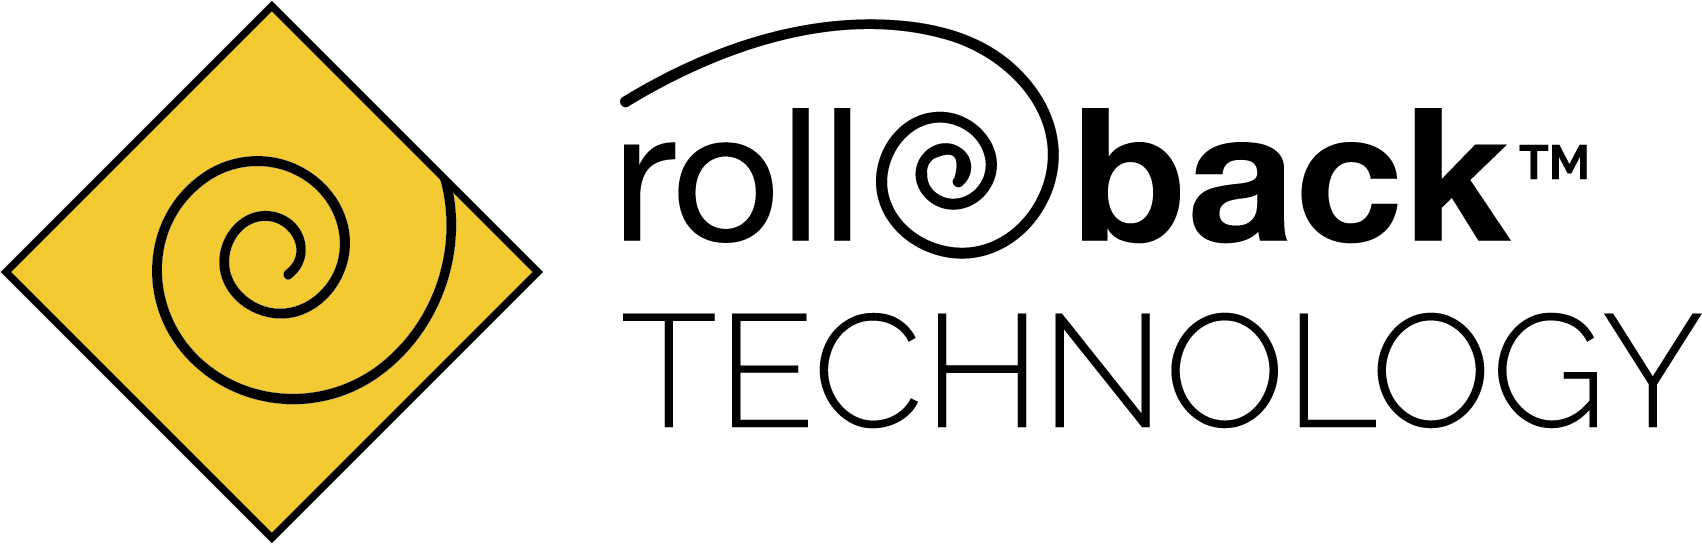 roll-back technology logo